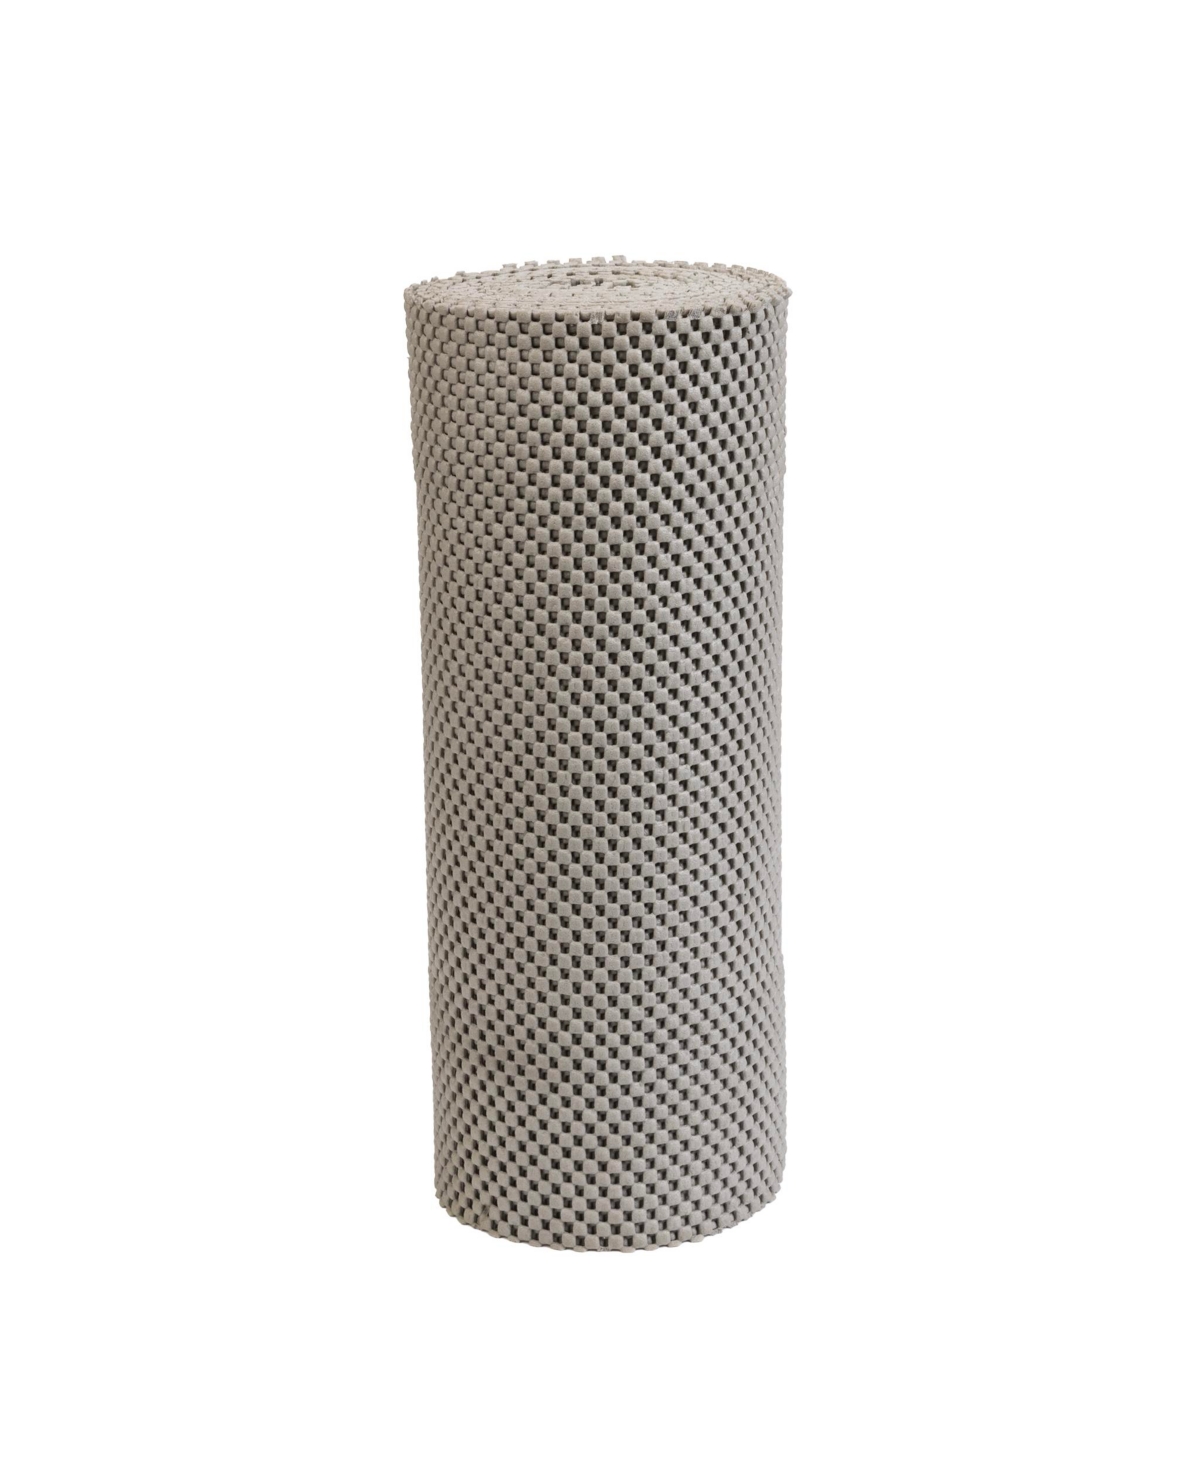 Smart Design Premium Grip Shelf Liner, 18 x 8' Roll - Coffee Bean